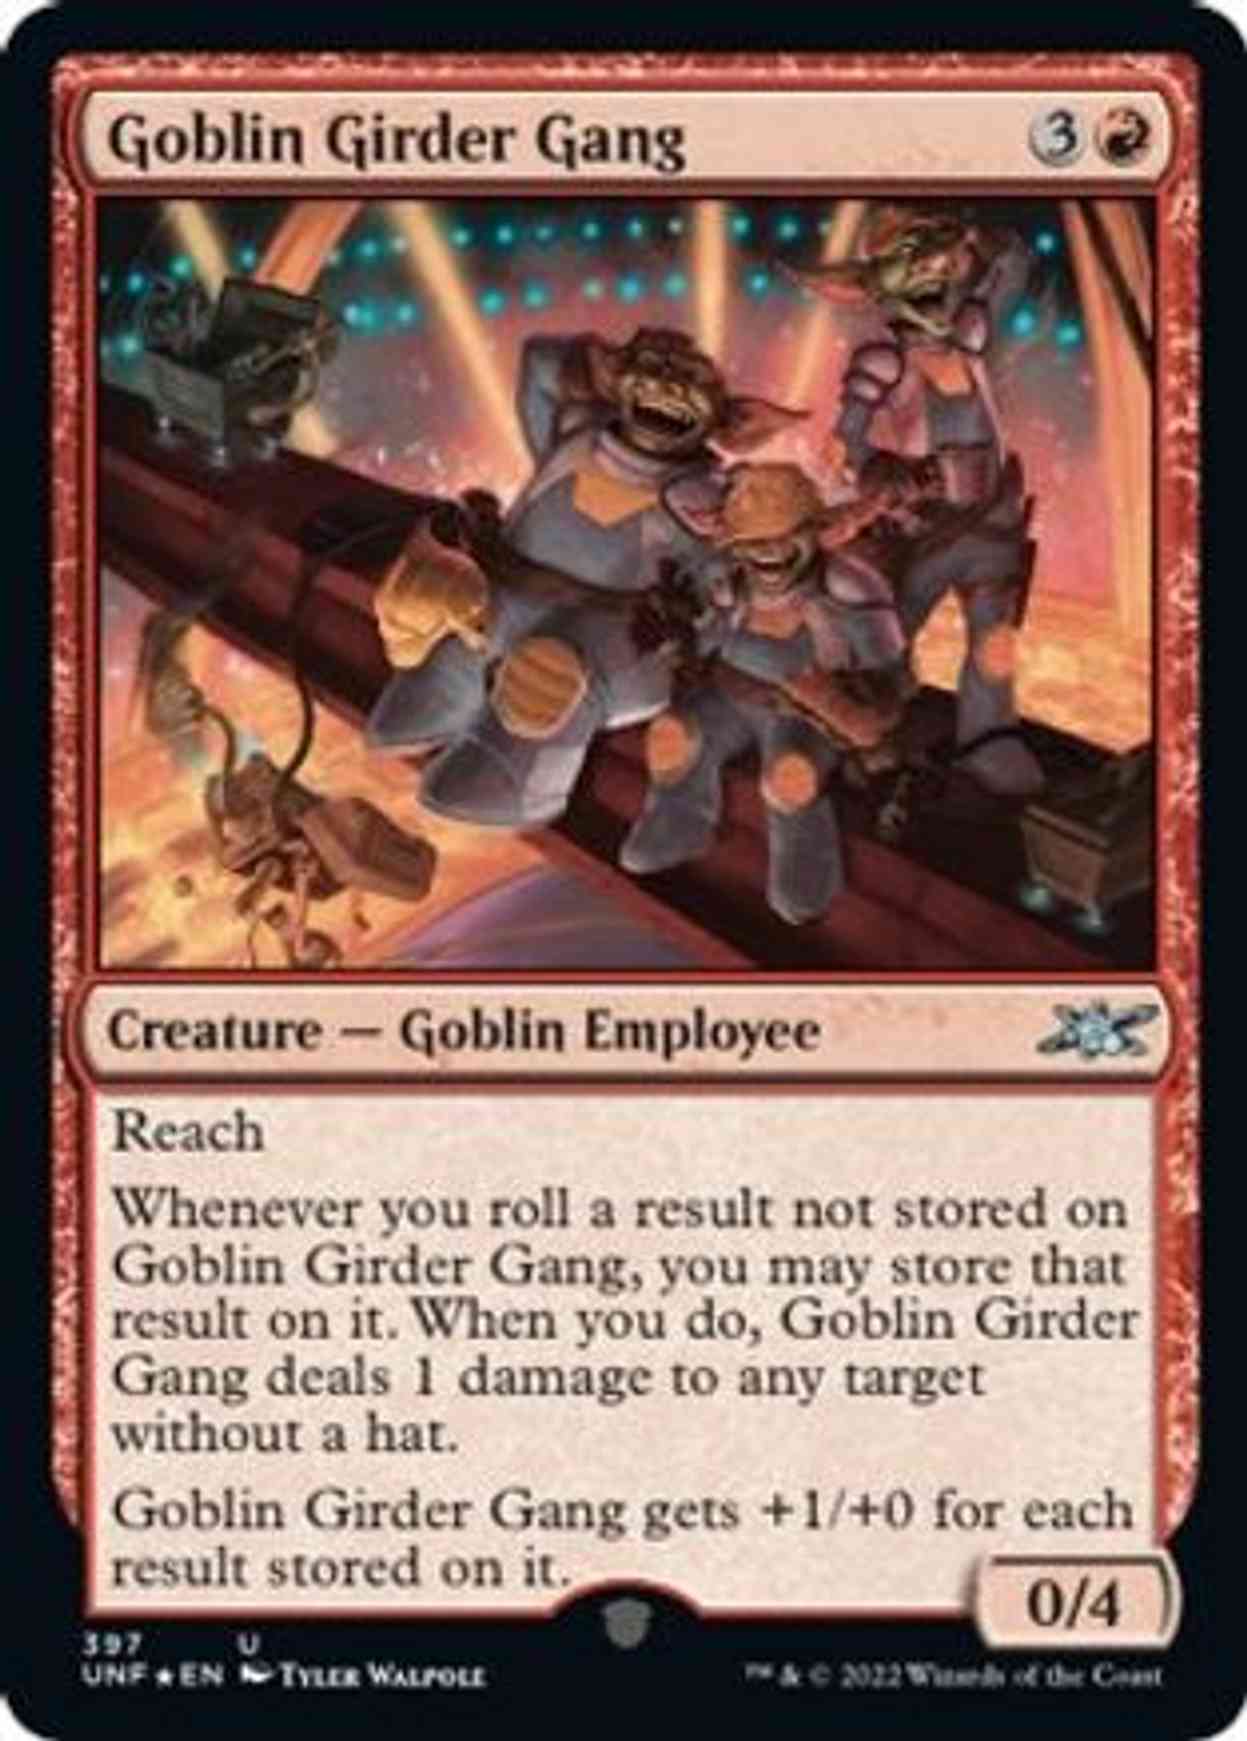 Goblin Girder Gang (Galaxy Foil) magic card front